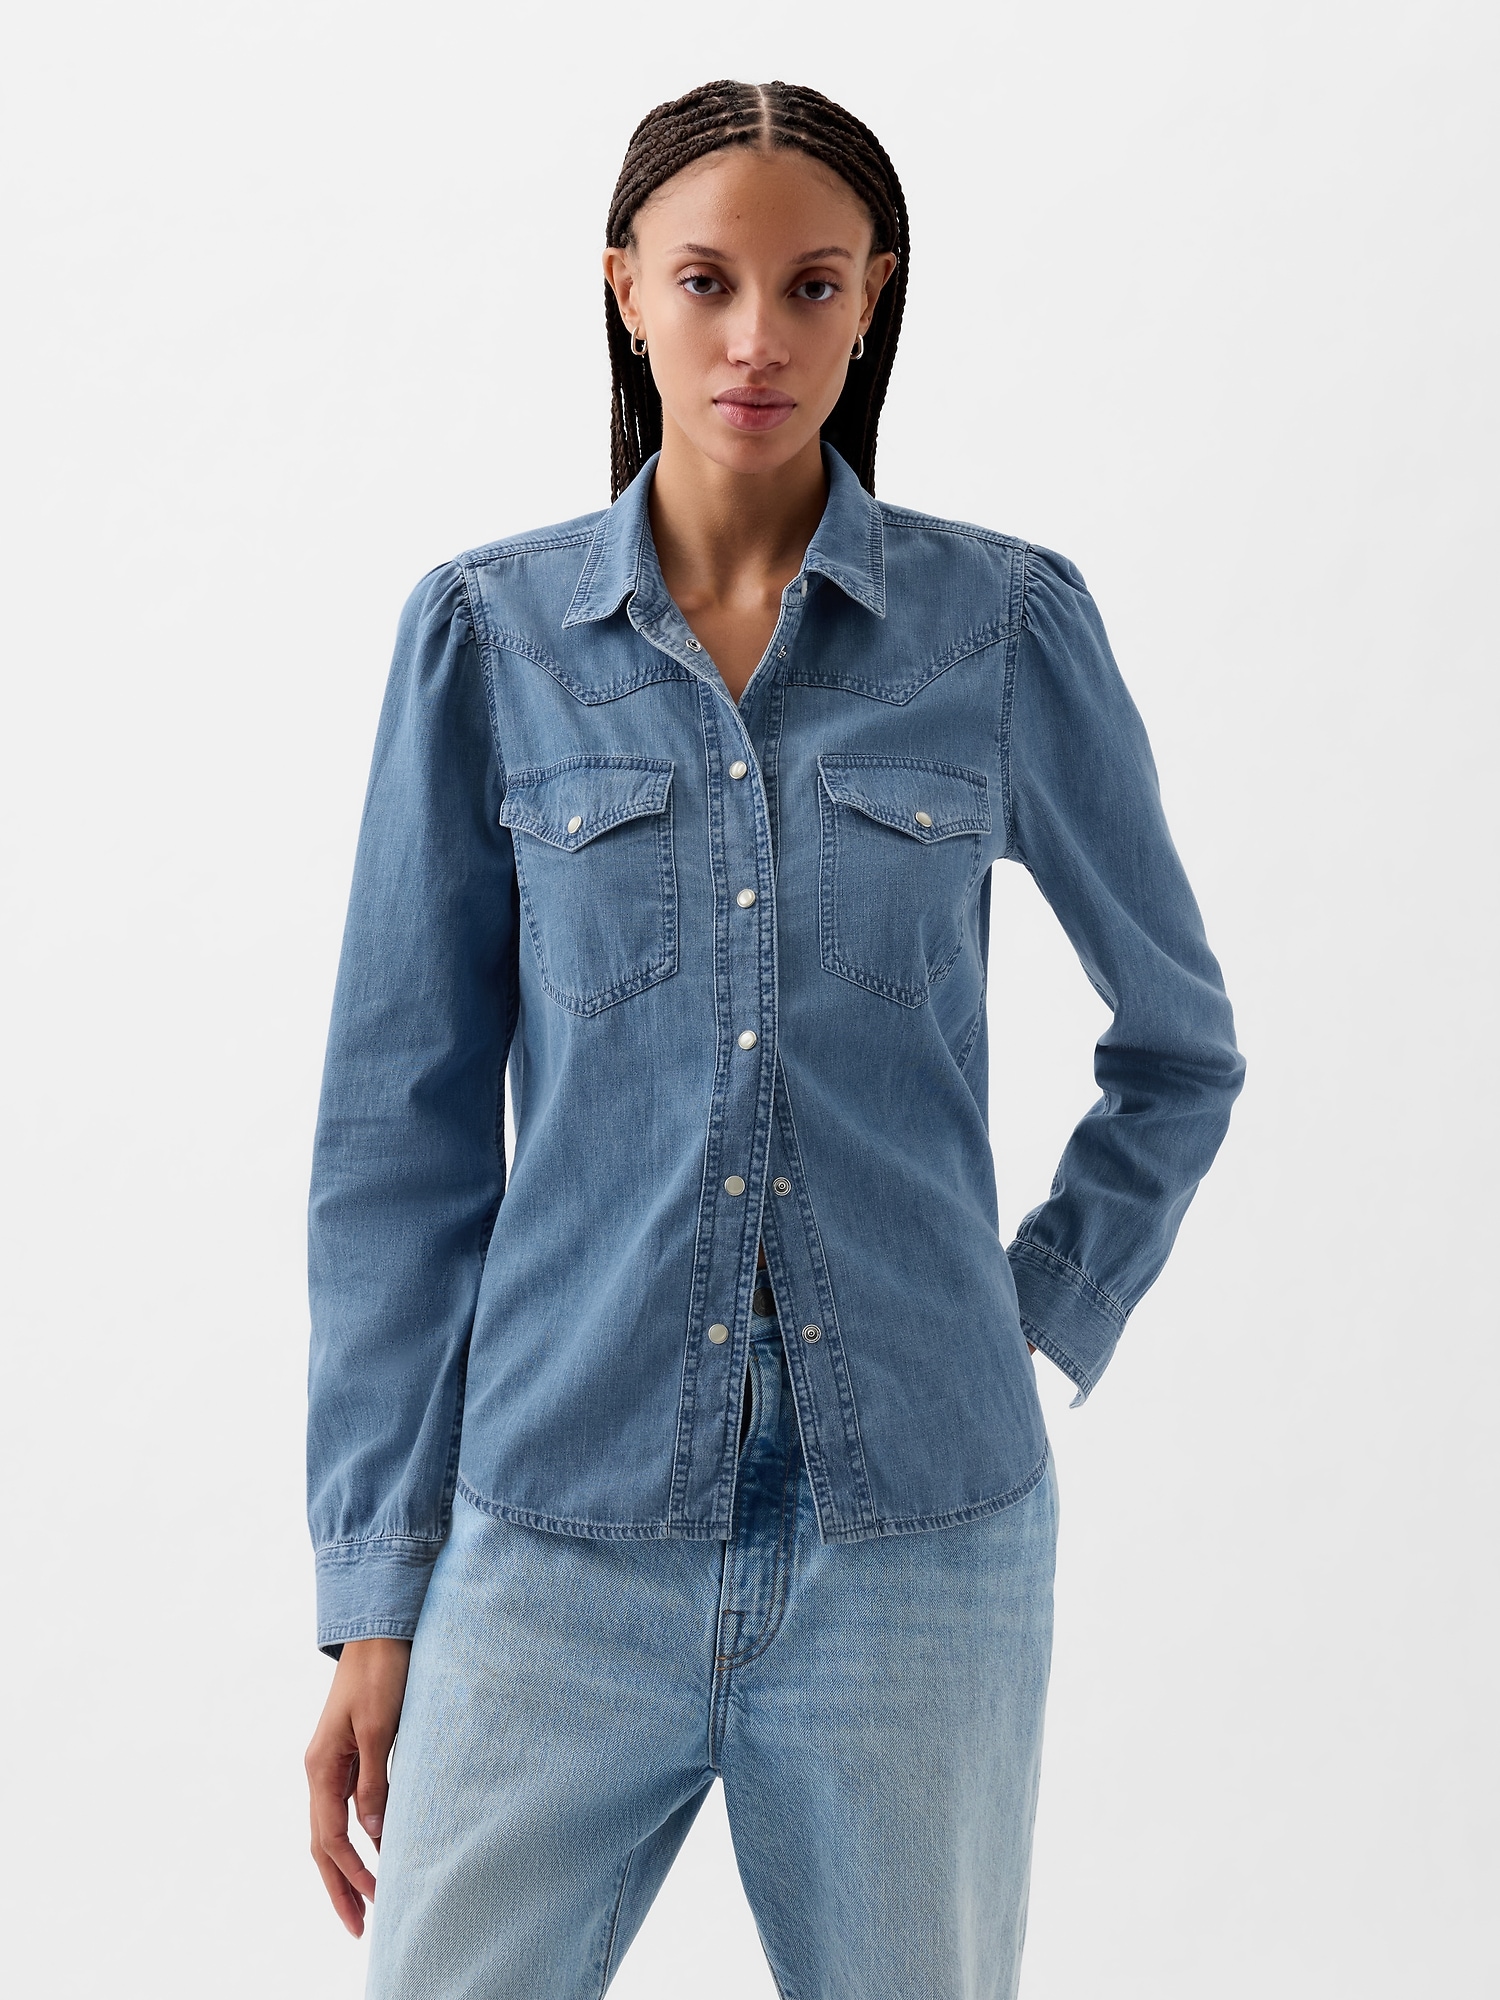 Women's Denim Western Shirt by Gap Blue Size S